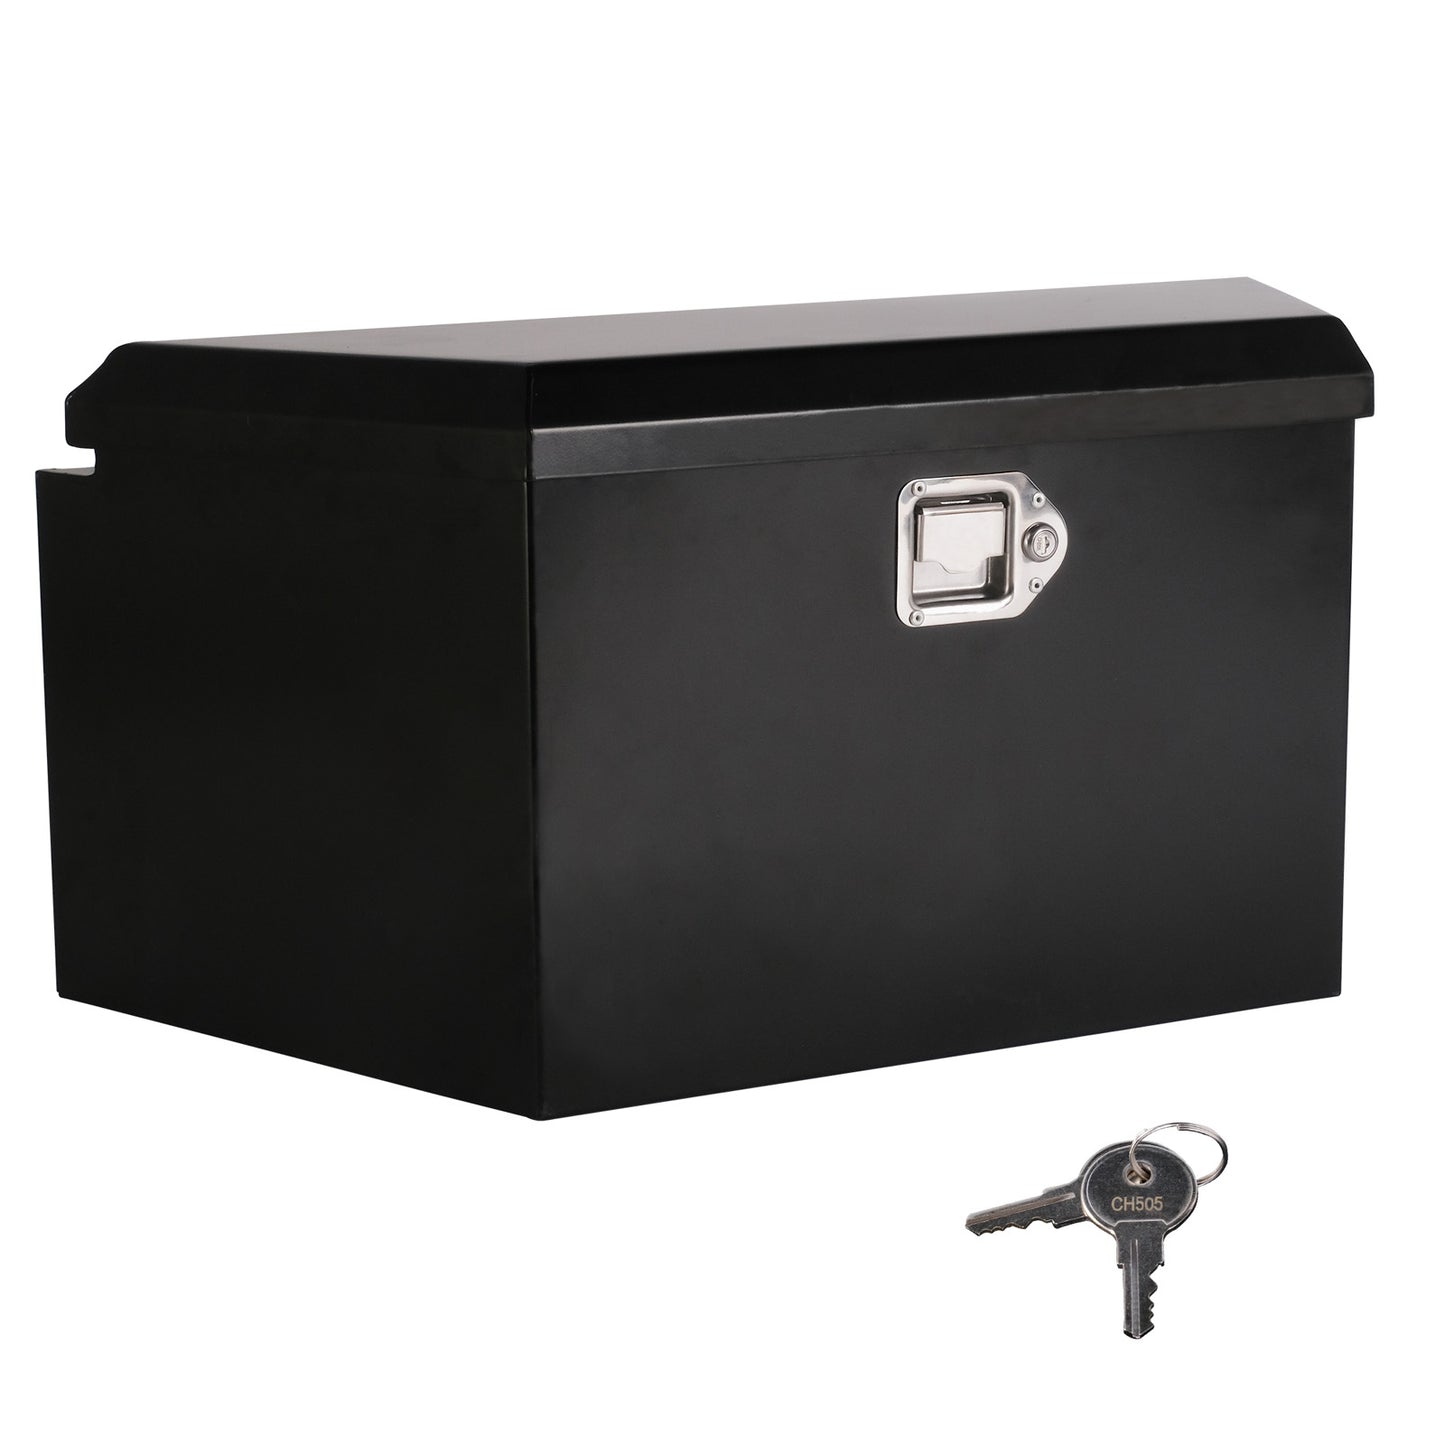 34" Trailer Tongue Box Steel Truck Tool Cargo Storage Box Storage Organizer with Lock, Black